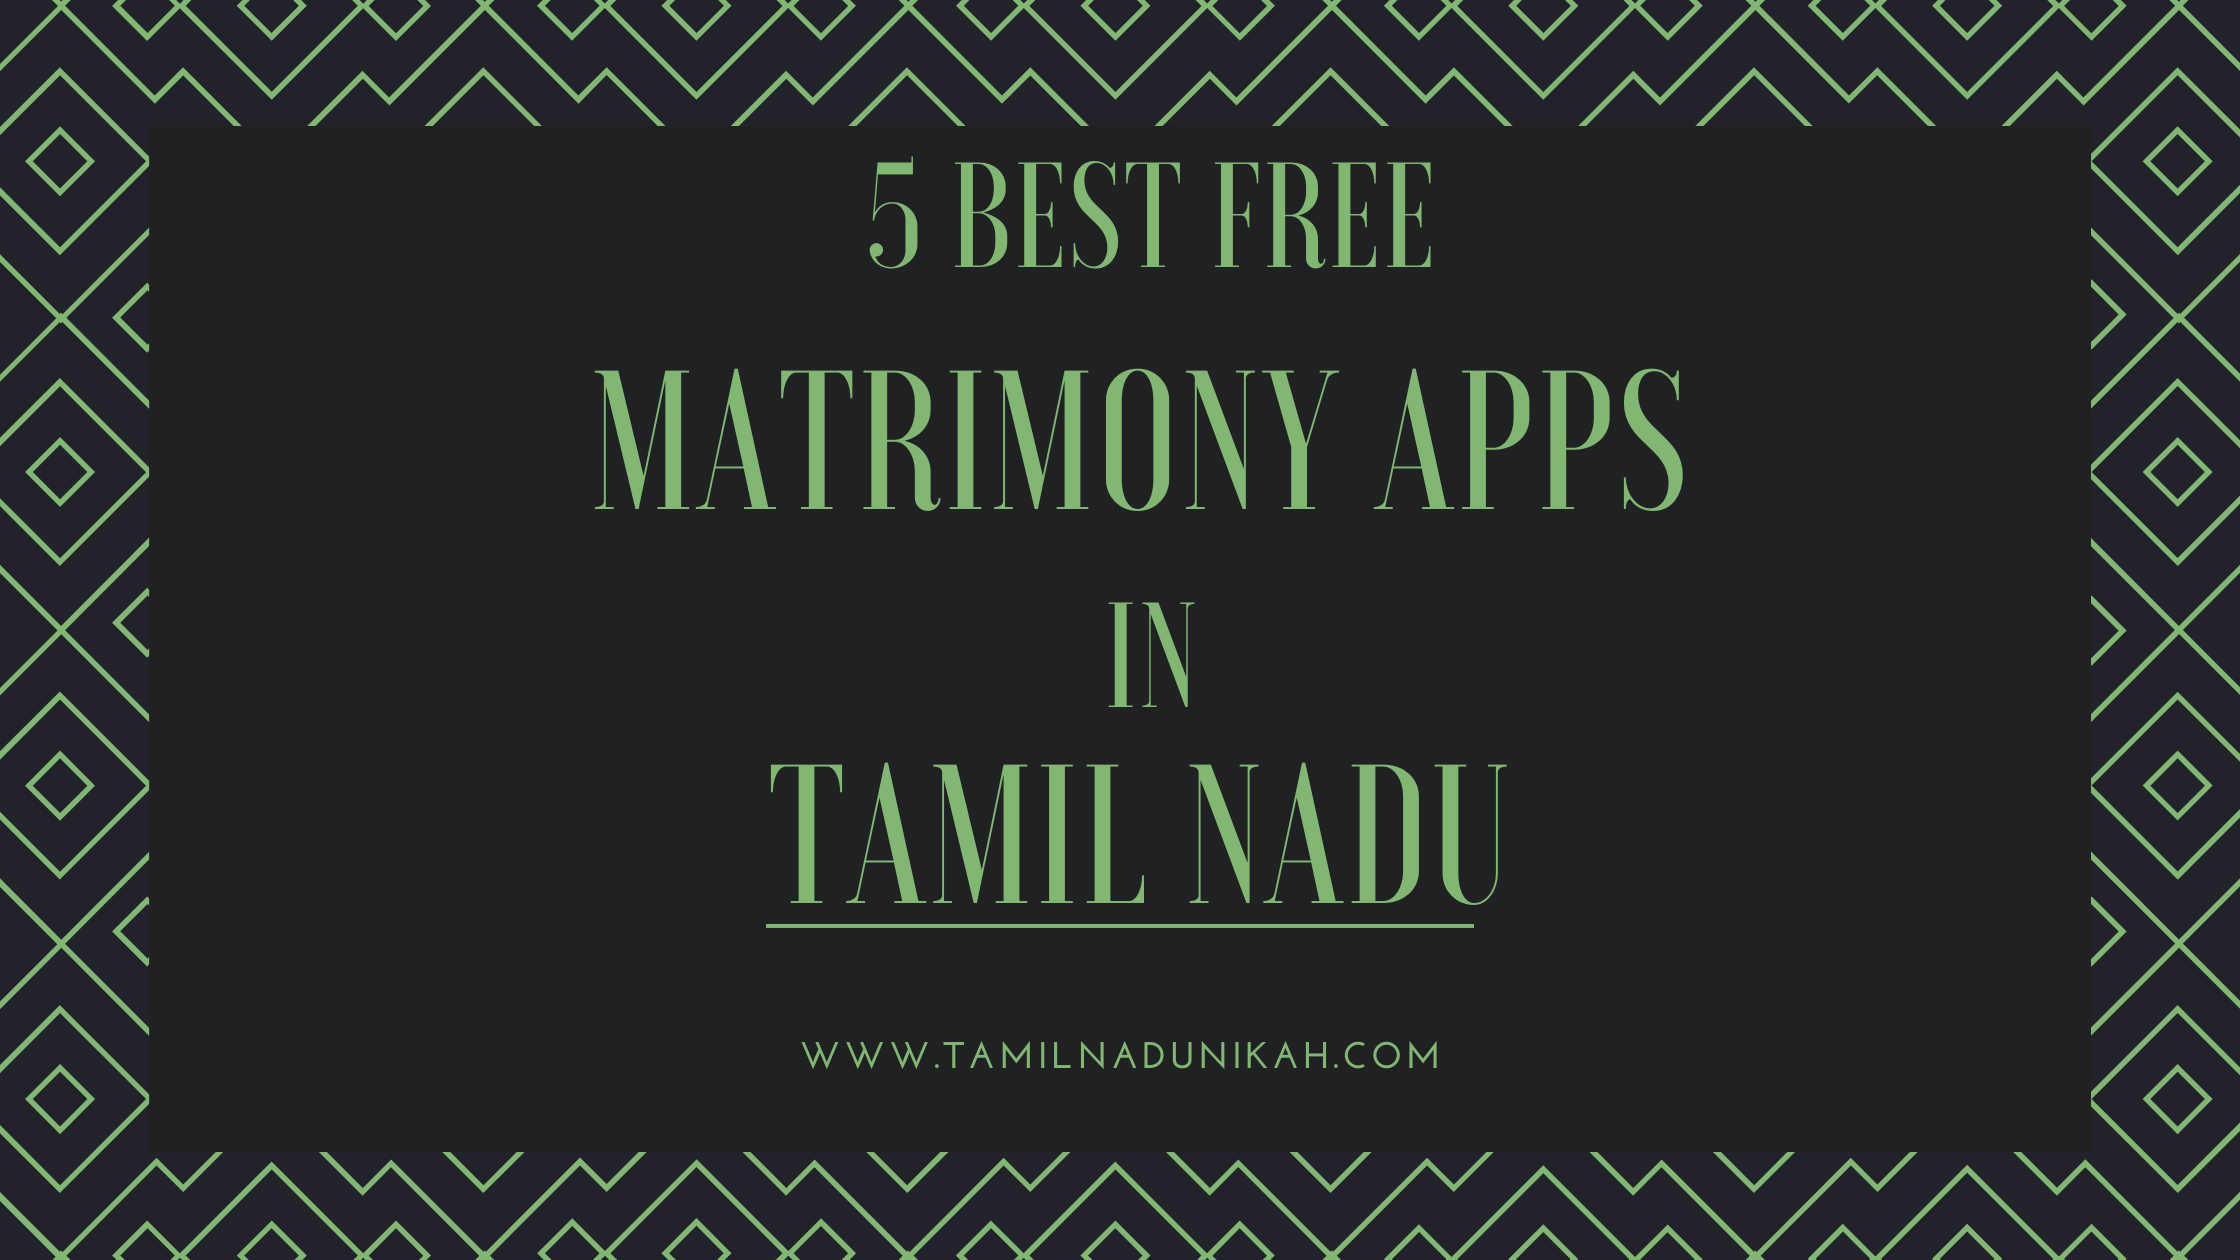 http://www.tamilnadunikah.com/muslim_matrimony/wp-content/uploads/2021/10/5_BEST_FREE_MATRIMONY_APPS_IN_TAMIL_NADU-1.png